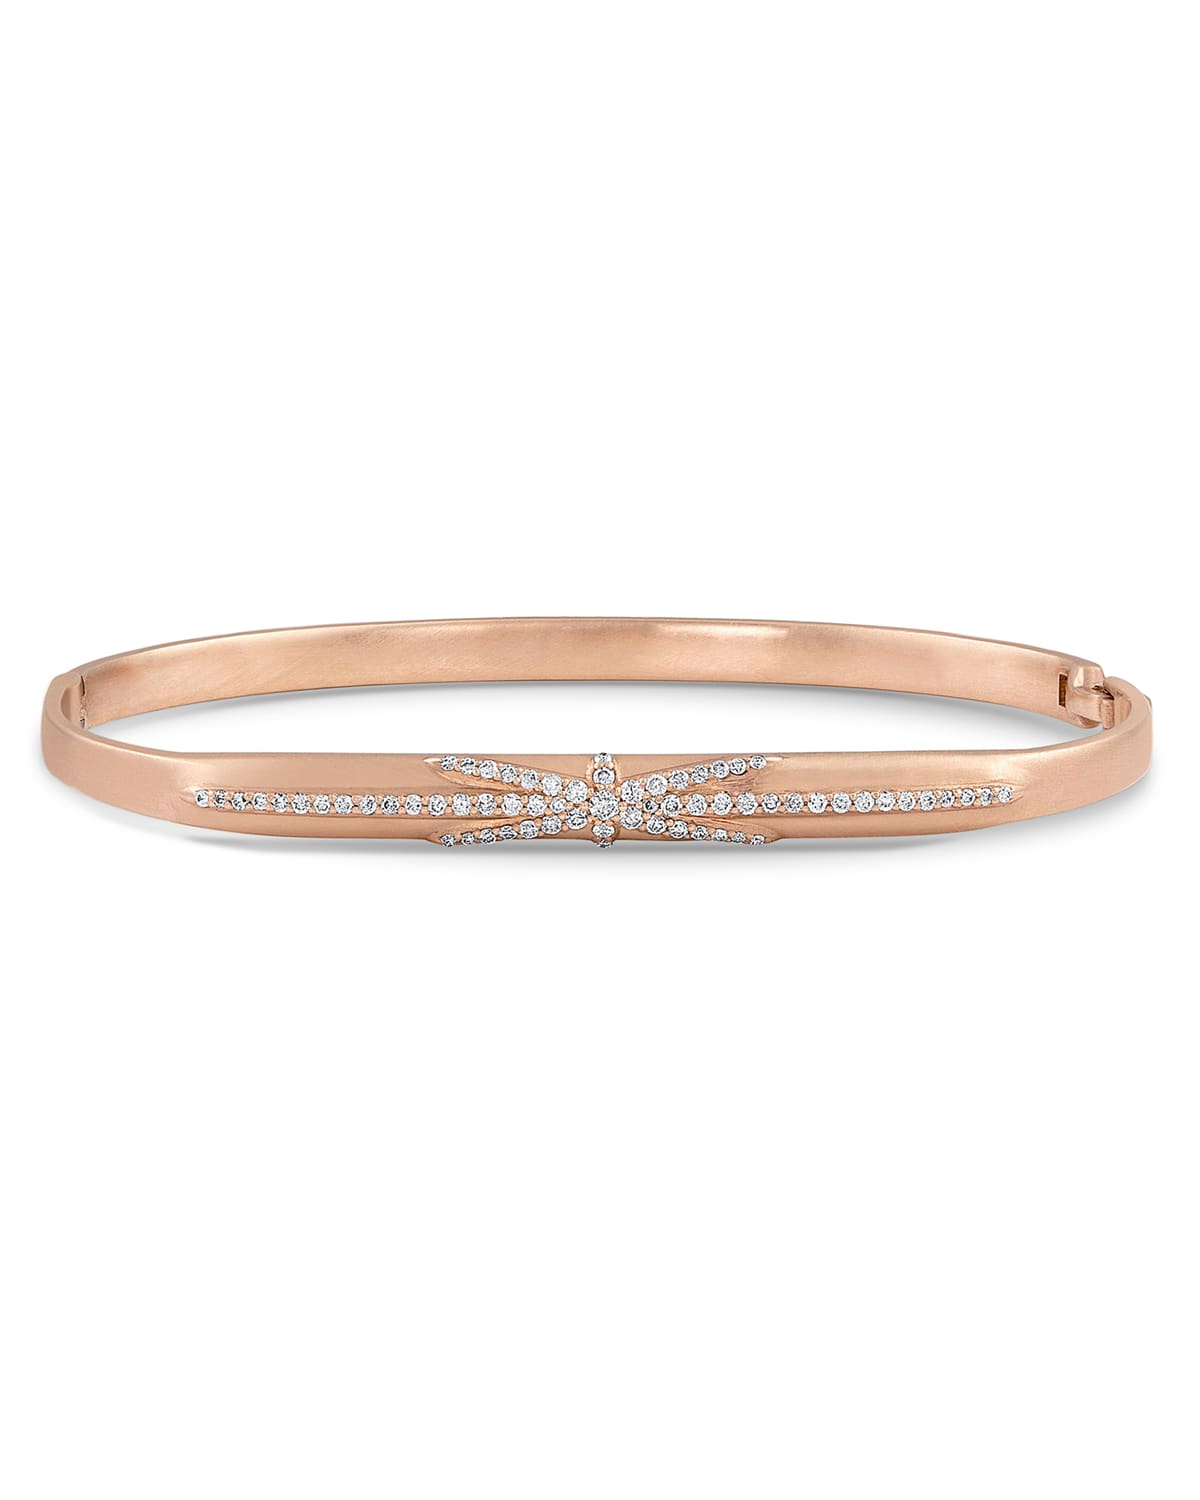 Dominique Cohen 18k Rose Gold Northstar Diamond Hinged Huggie Bangle Bracelet